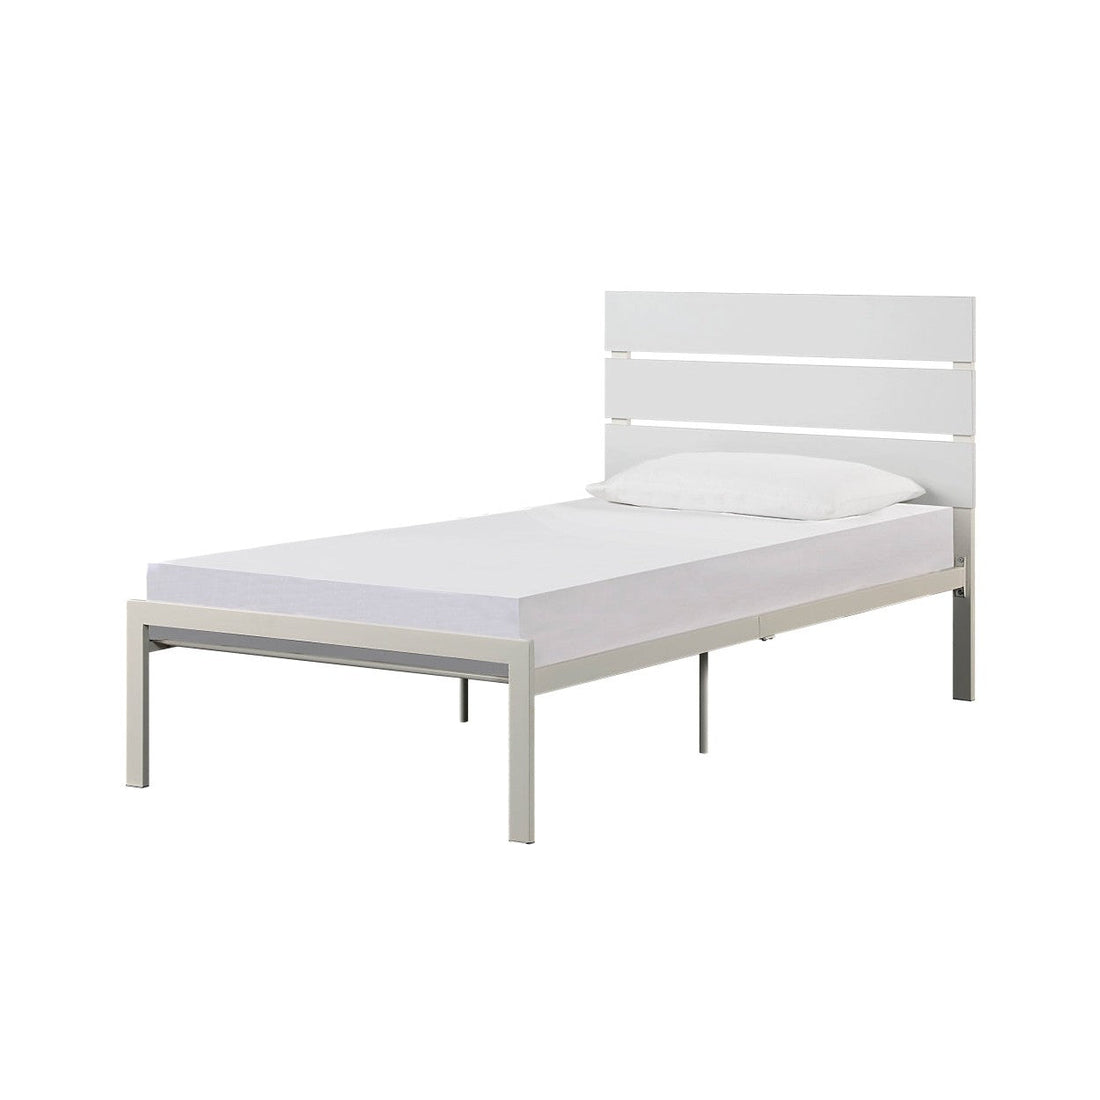 WHITE METAL BED, TWIN HM1804WHT-1